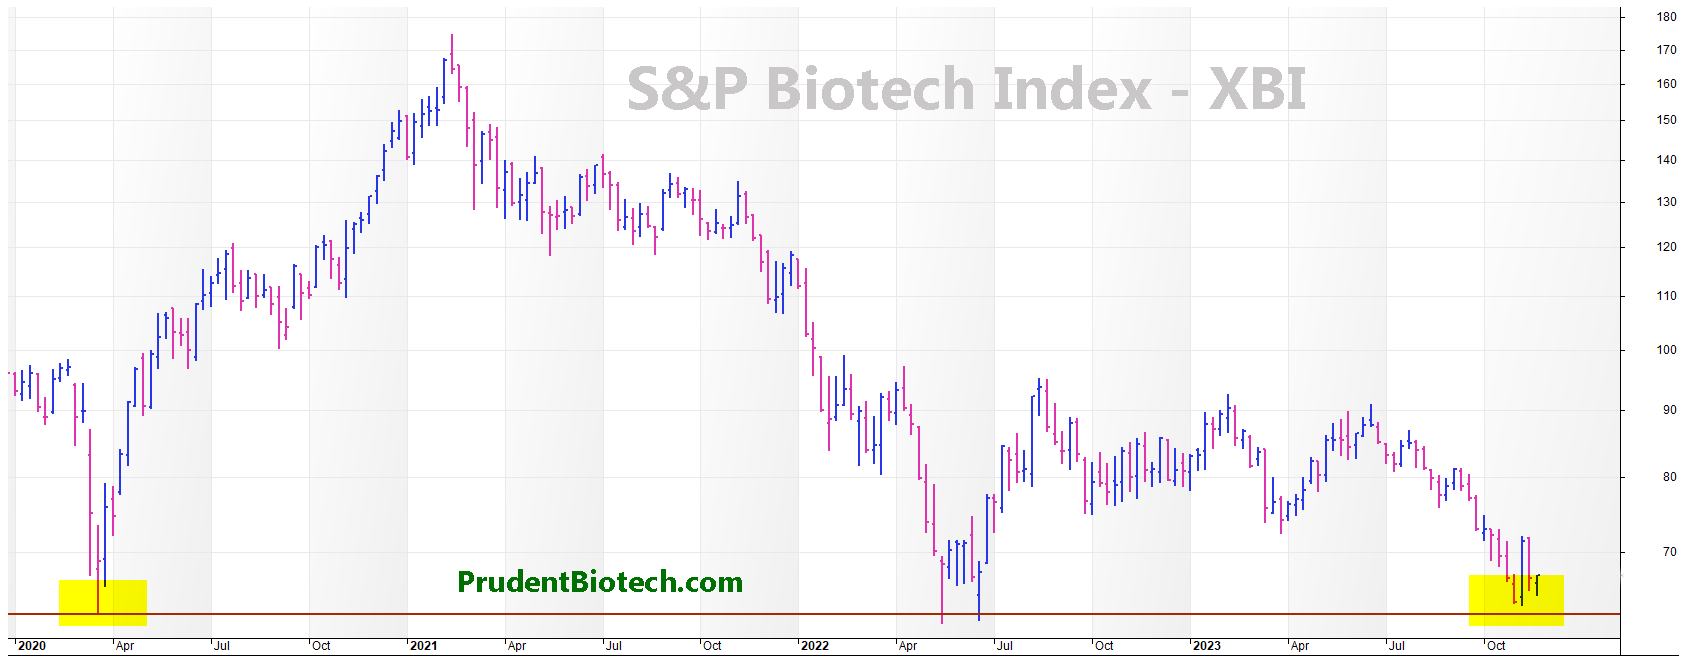 S&P Biotech Index
